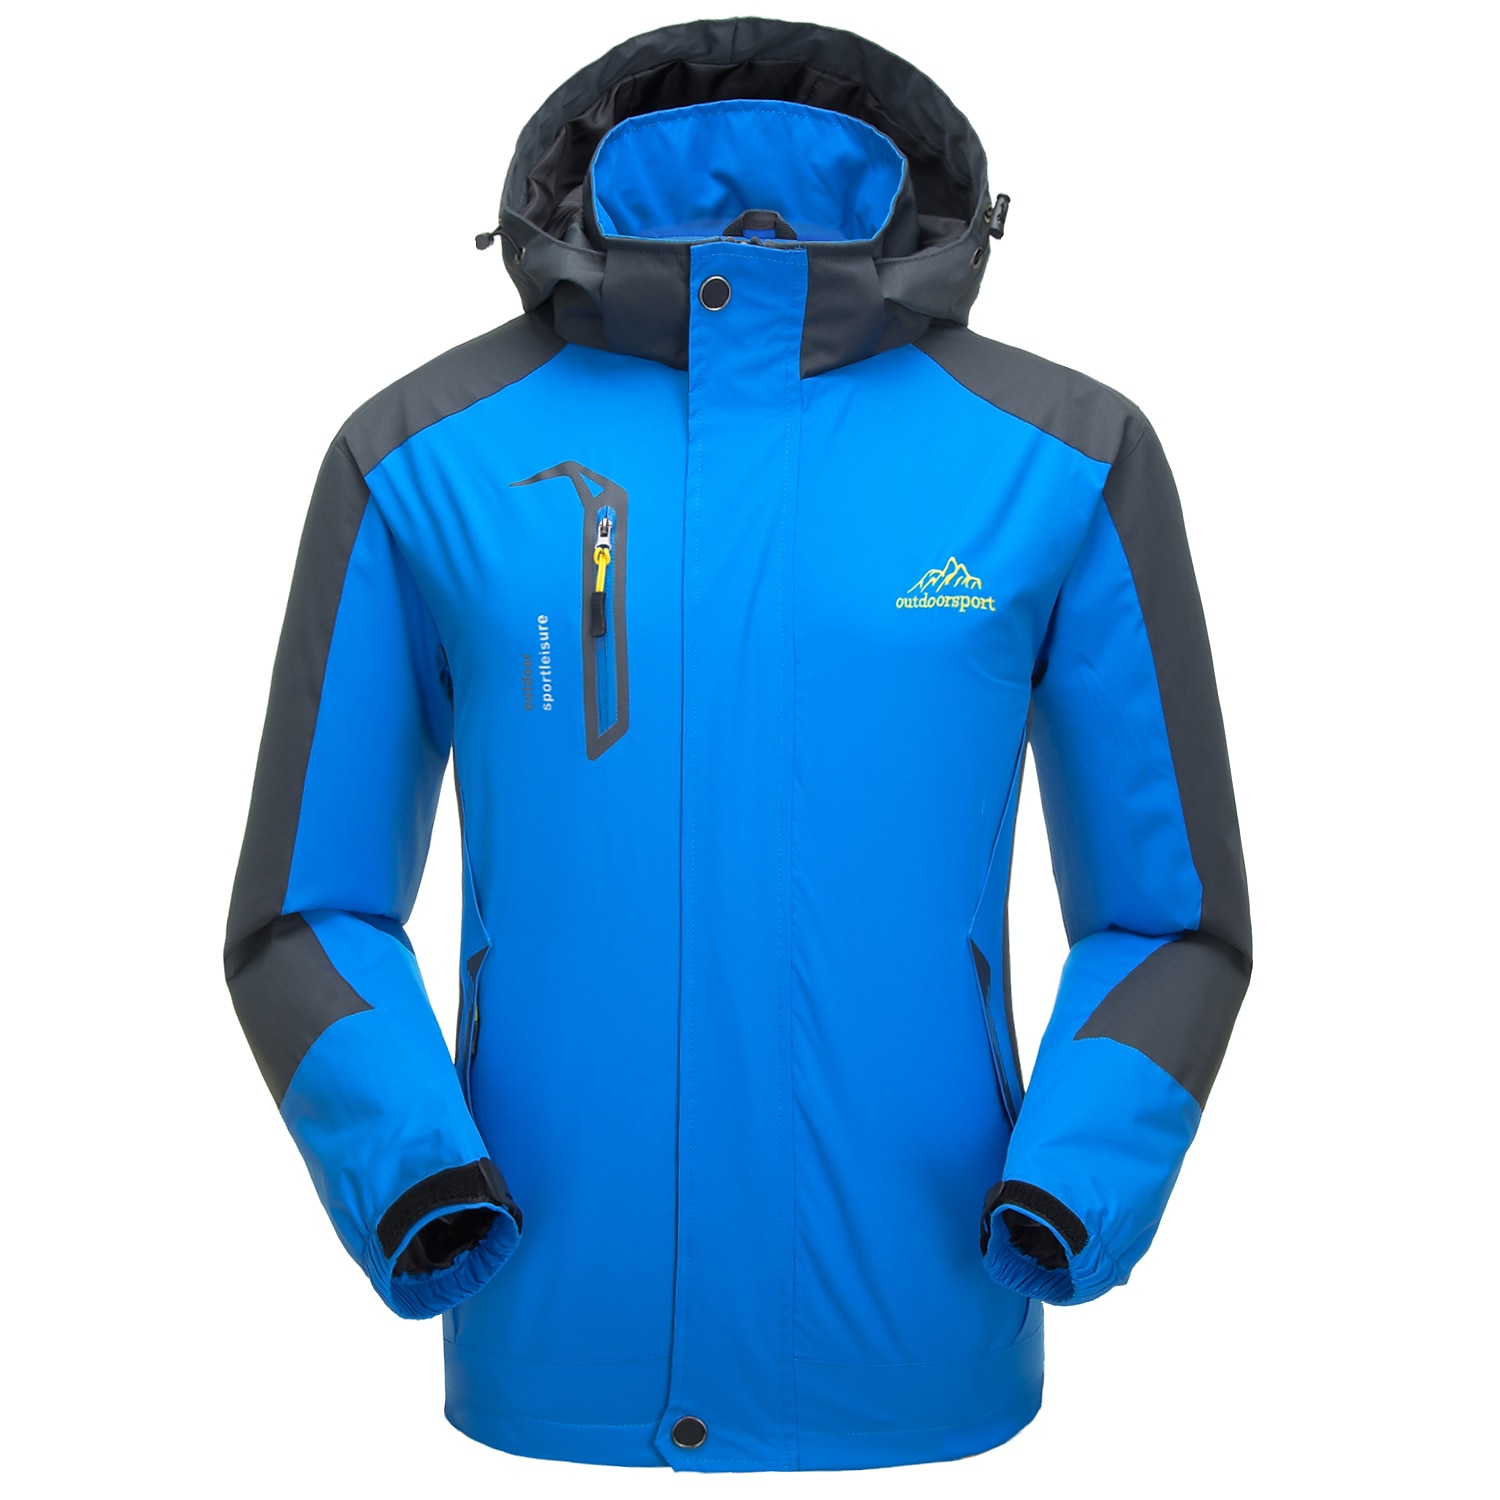  Mens Ski Jacket with Detachable Hood, Waterproof Rain